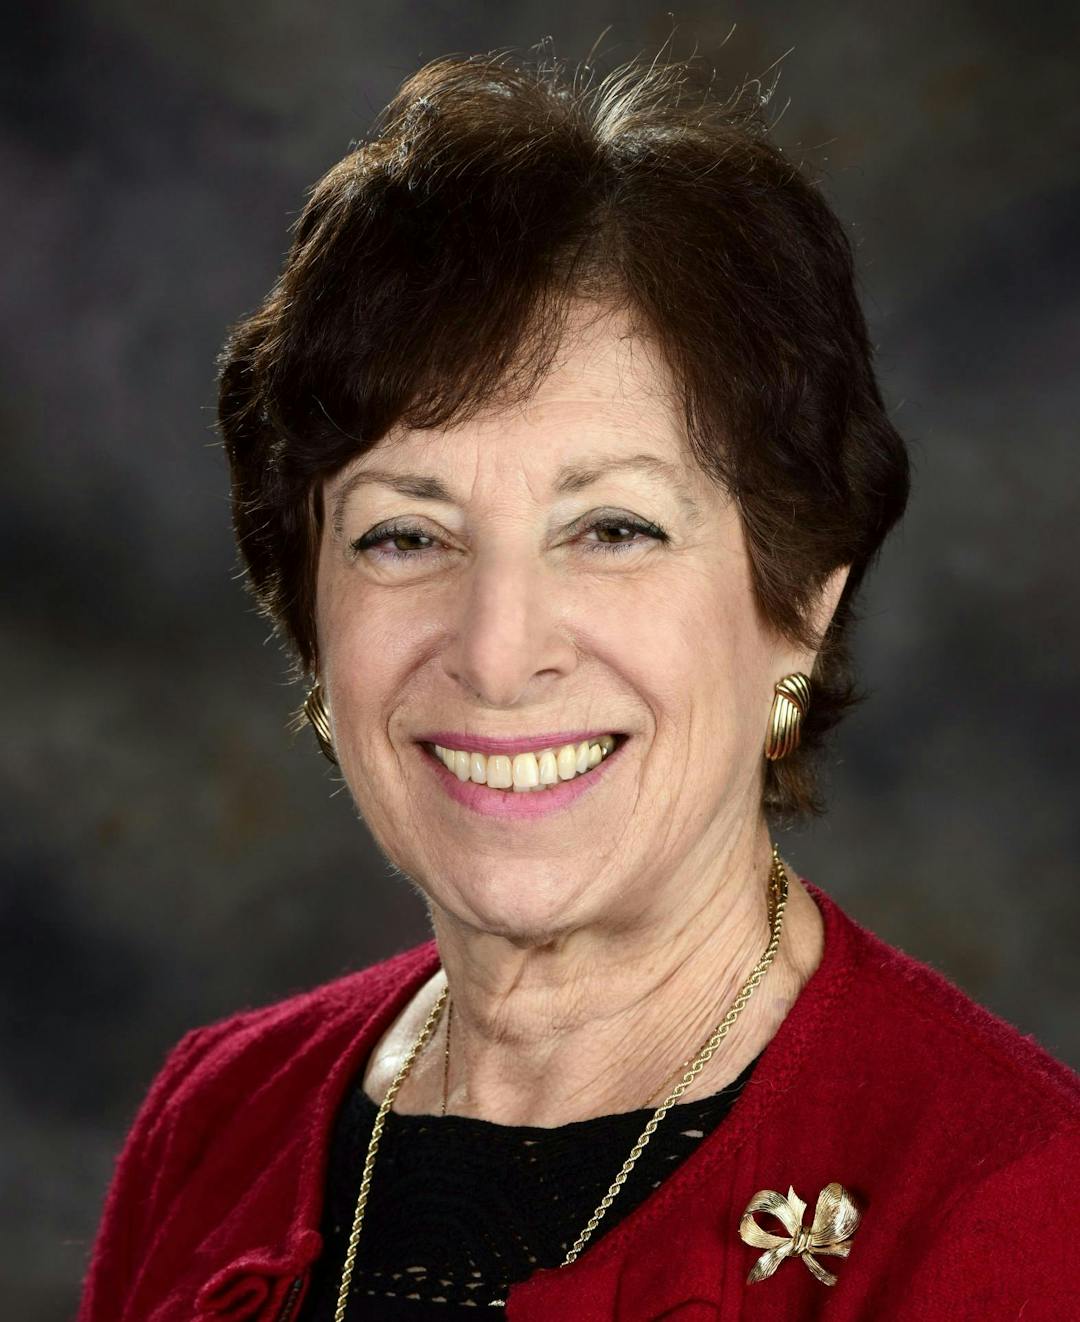 Dr. Linda Birnbaum, scientist emeritus, former director of NIEHS
